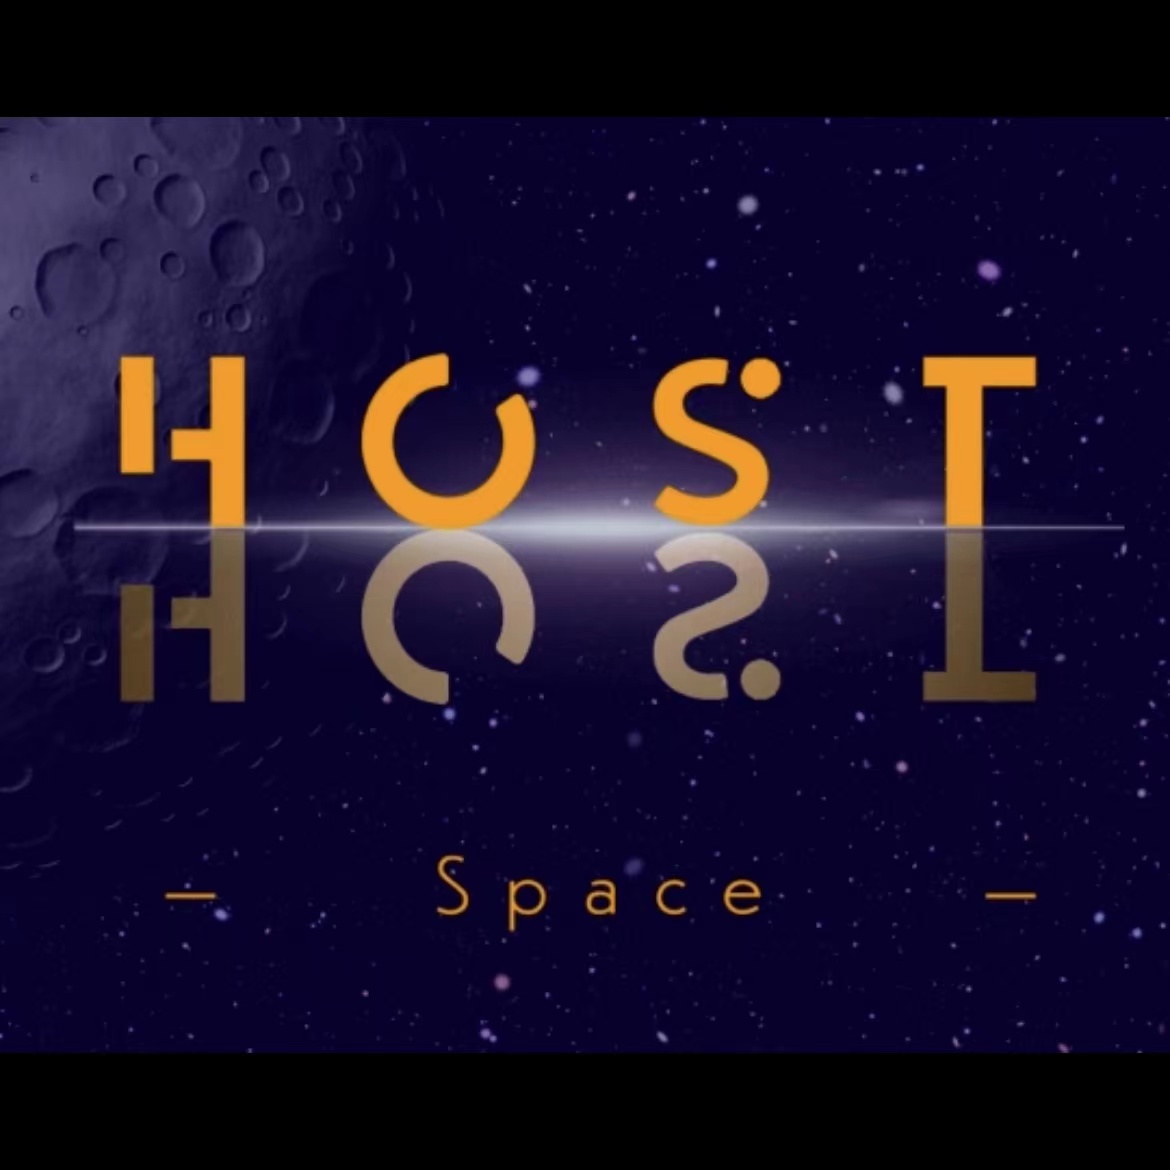 host